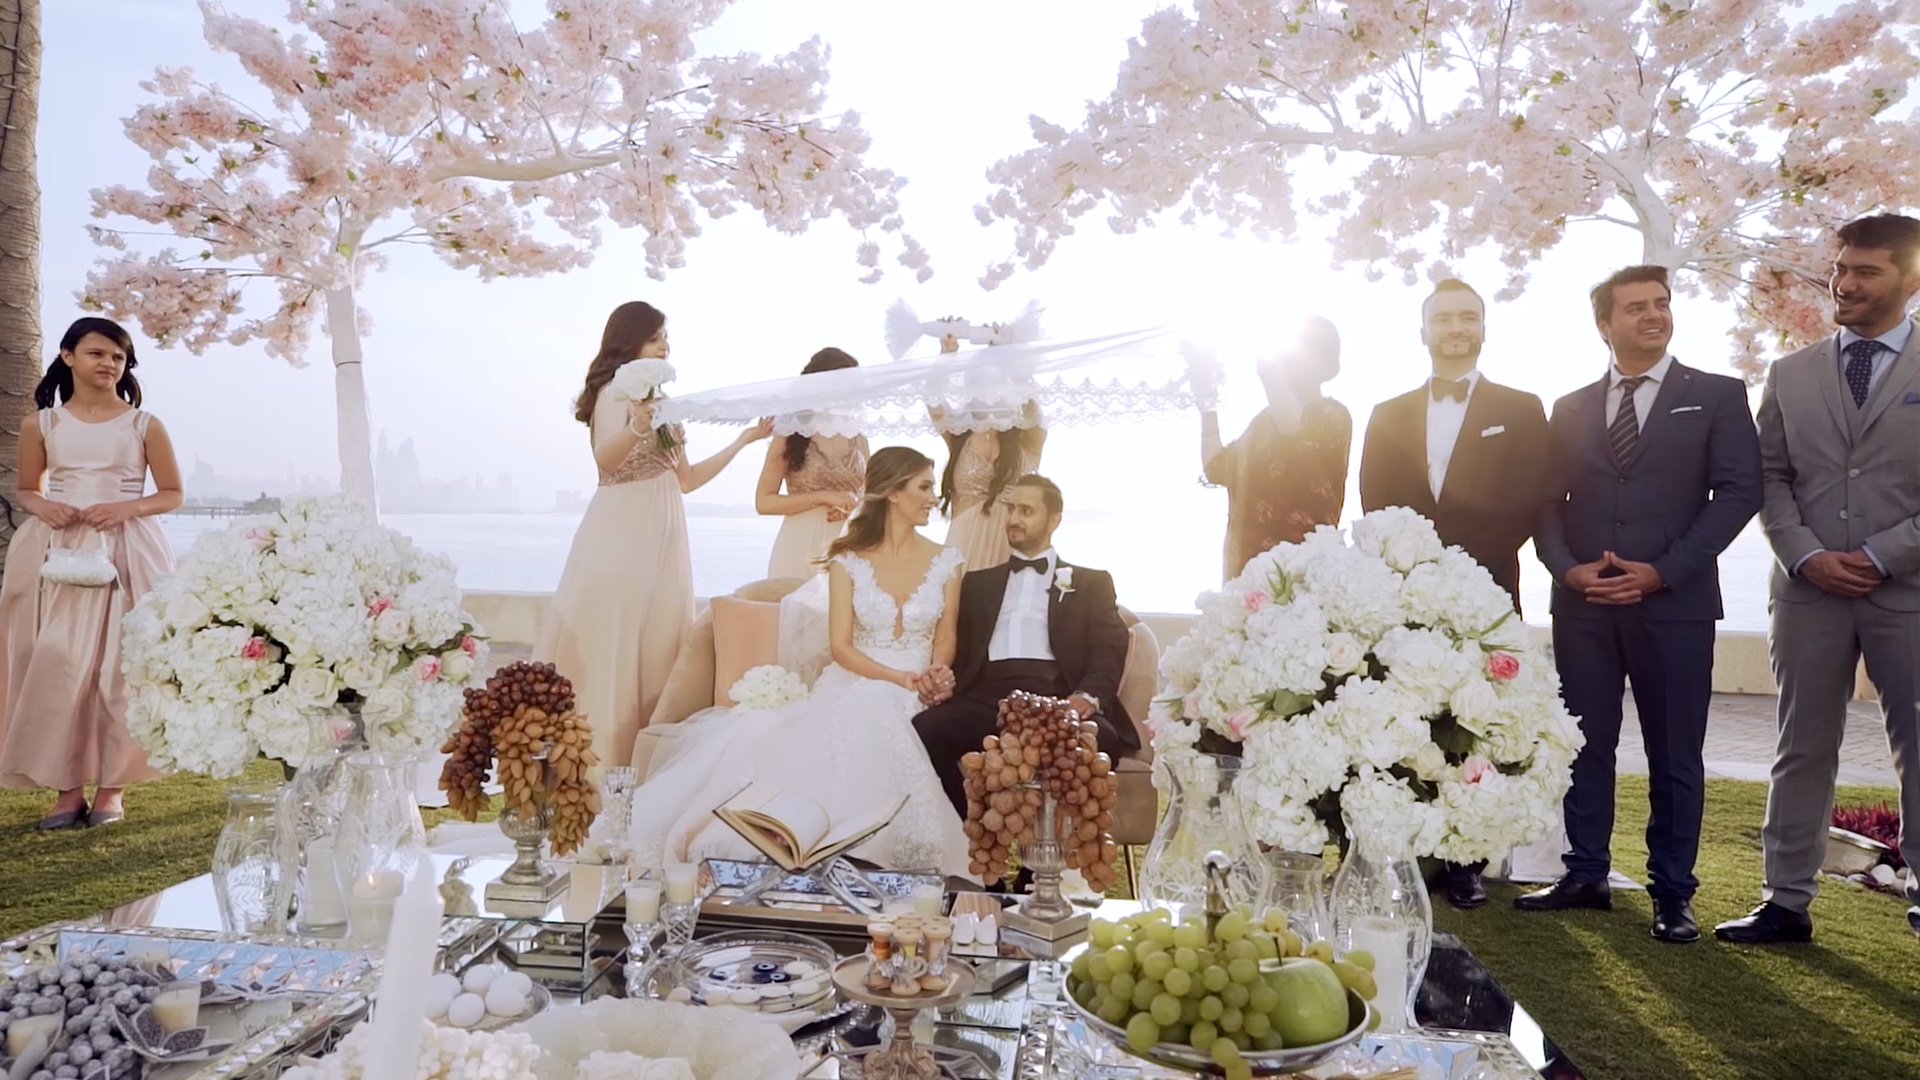 Dubai Wedding Videography and Photography, Live Feed Weddings Zoom